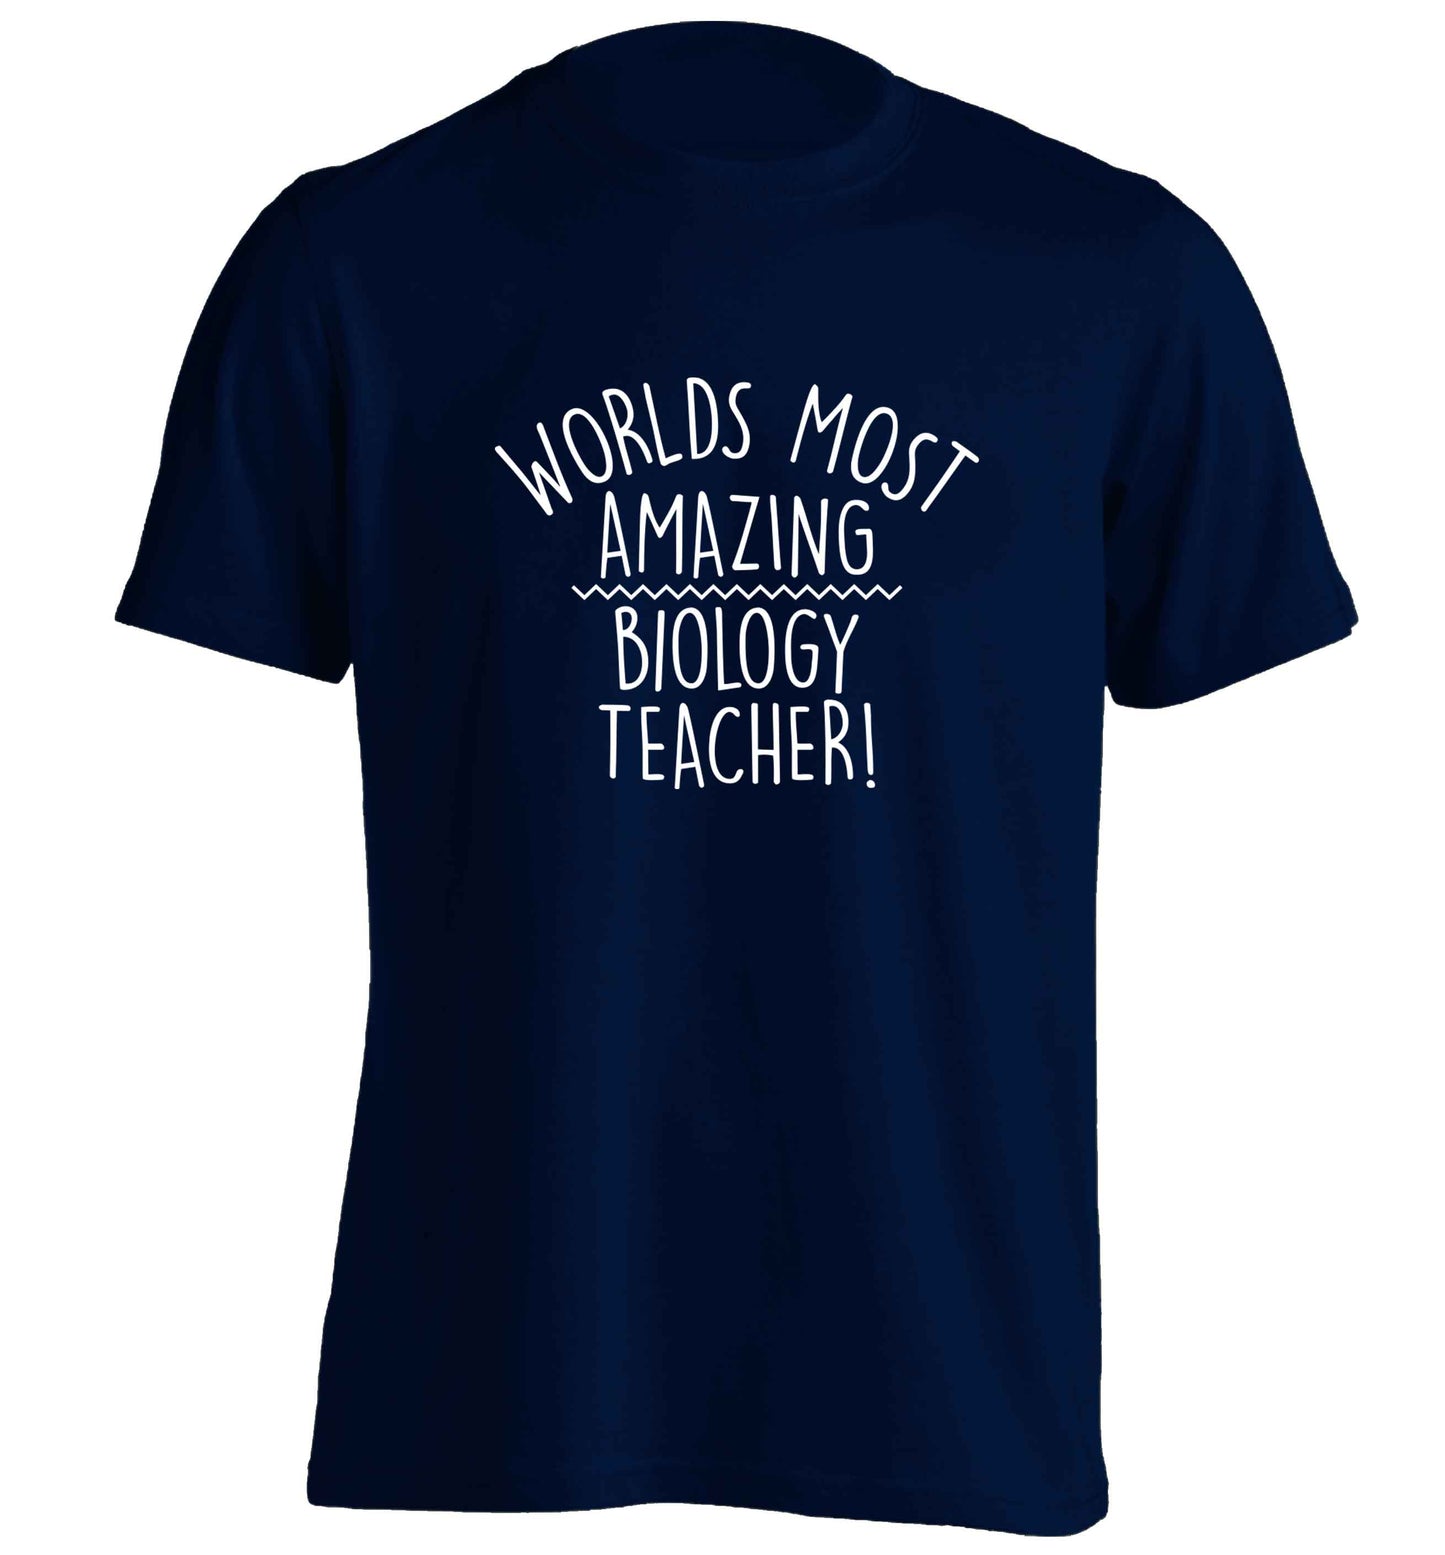 Worlds most amazing biology teacher adults unisex navy Tshirt 2XL